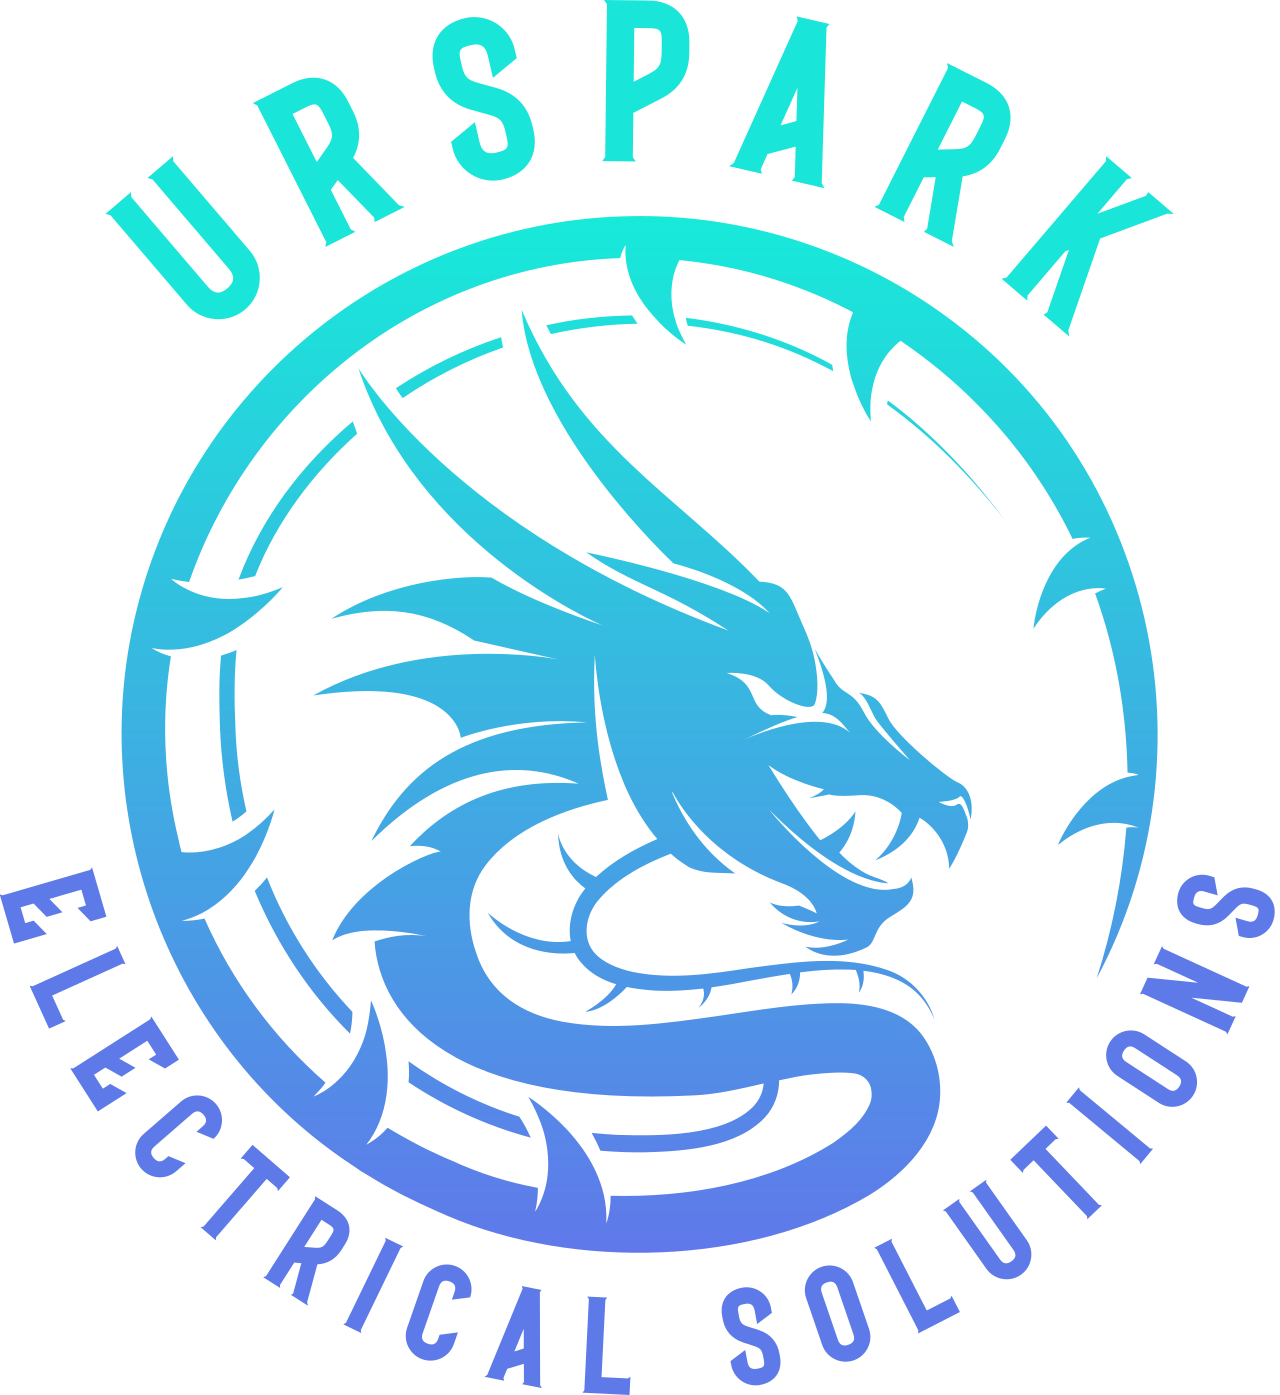 URSPARK's logo